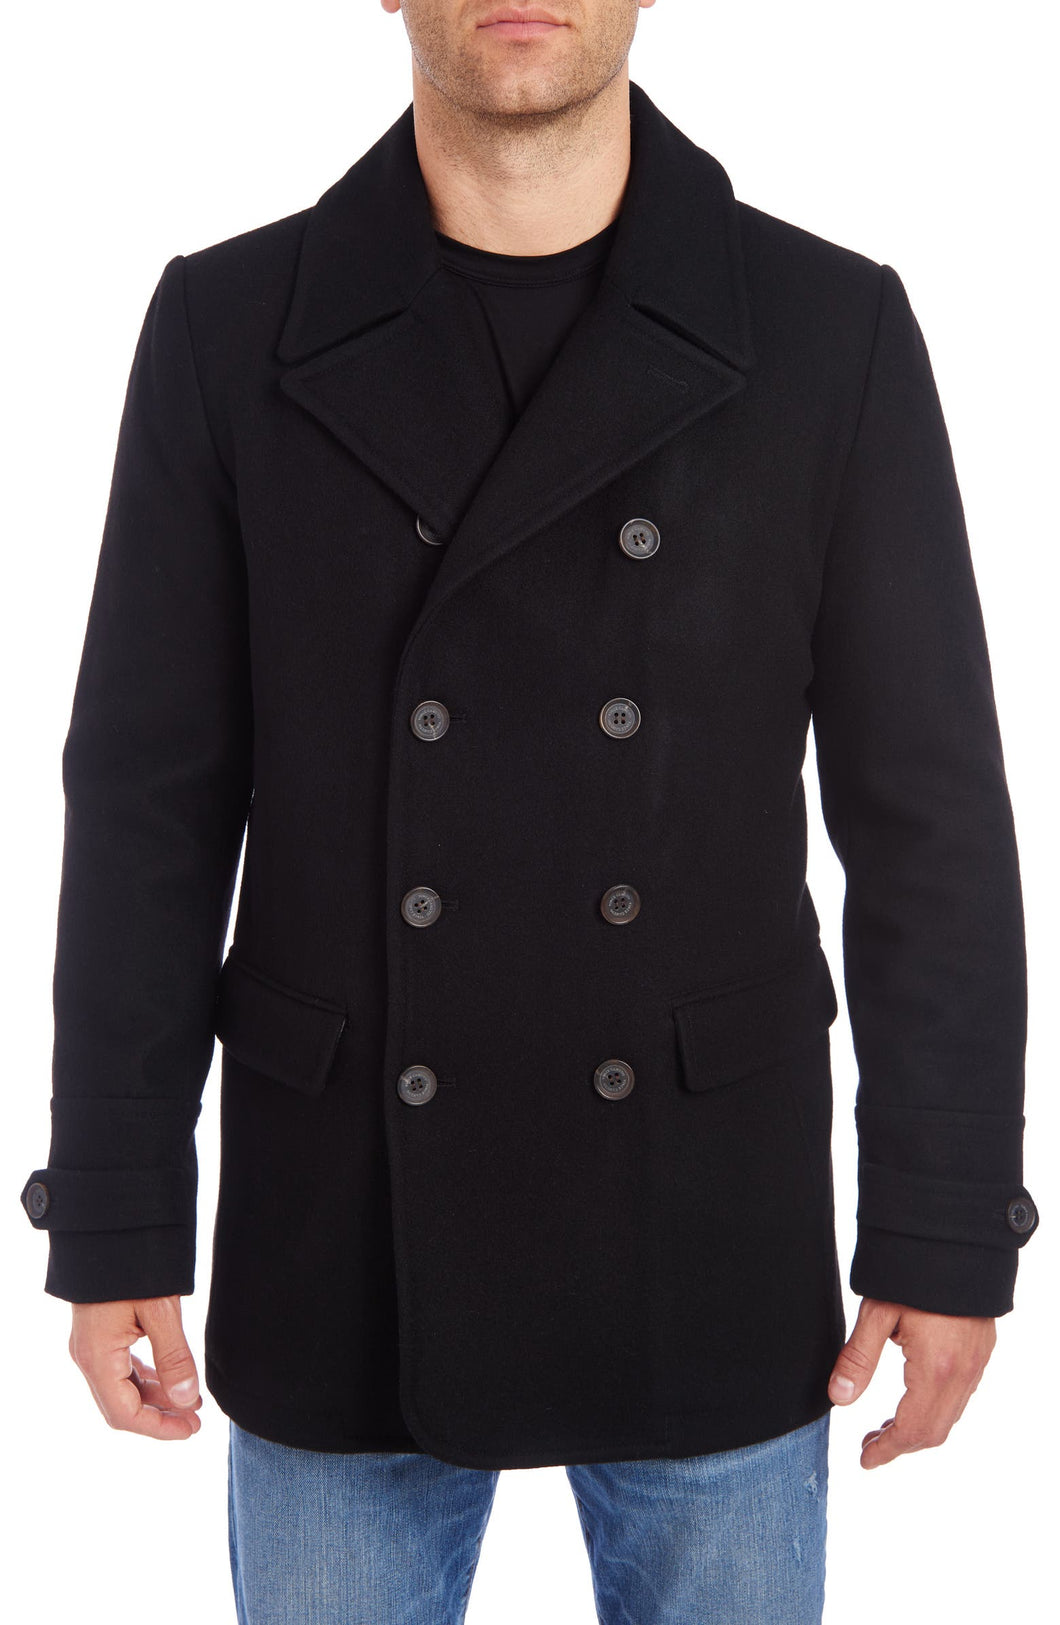 Men's Black Wool Blend Coat